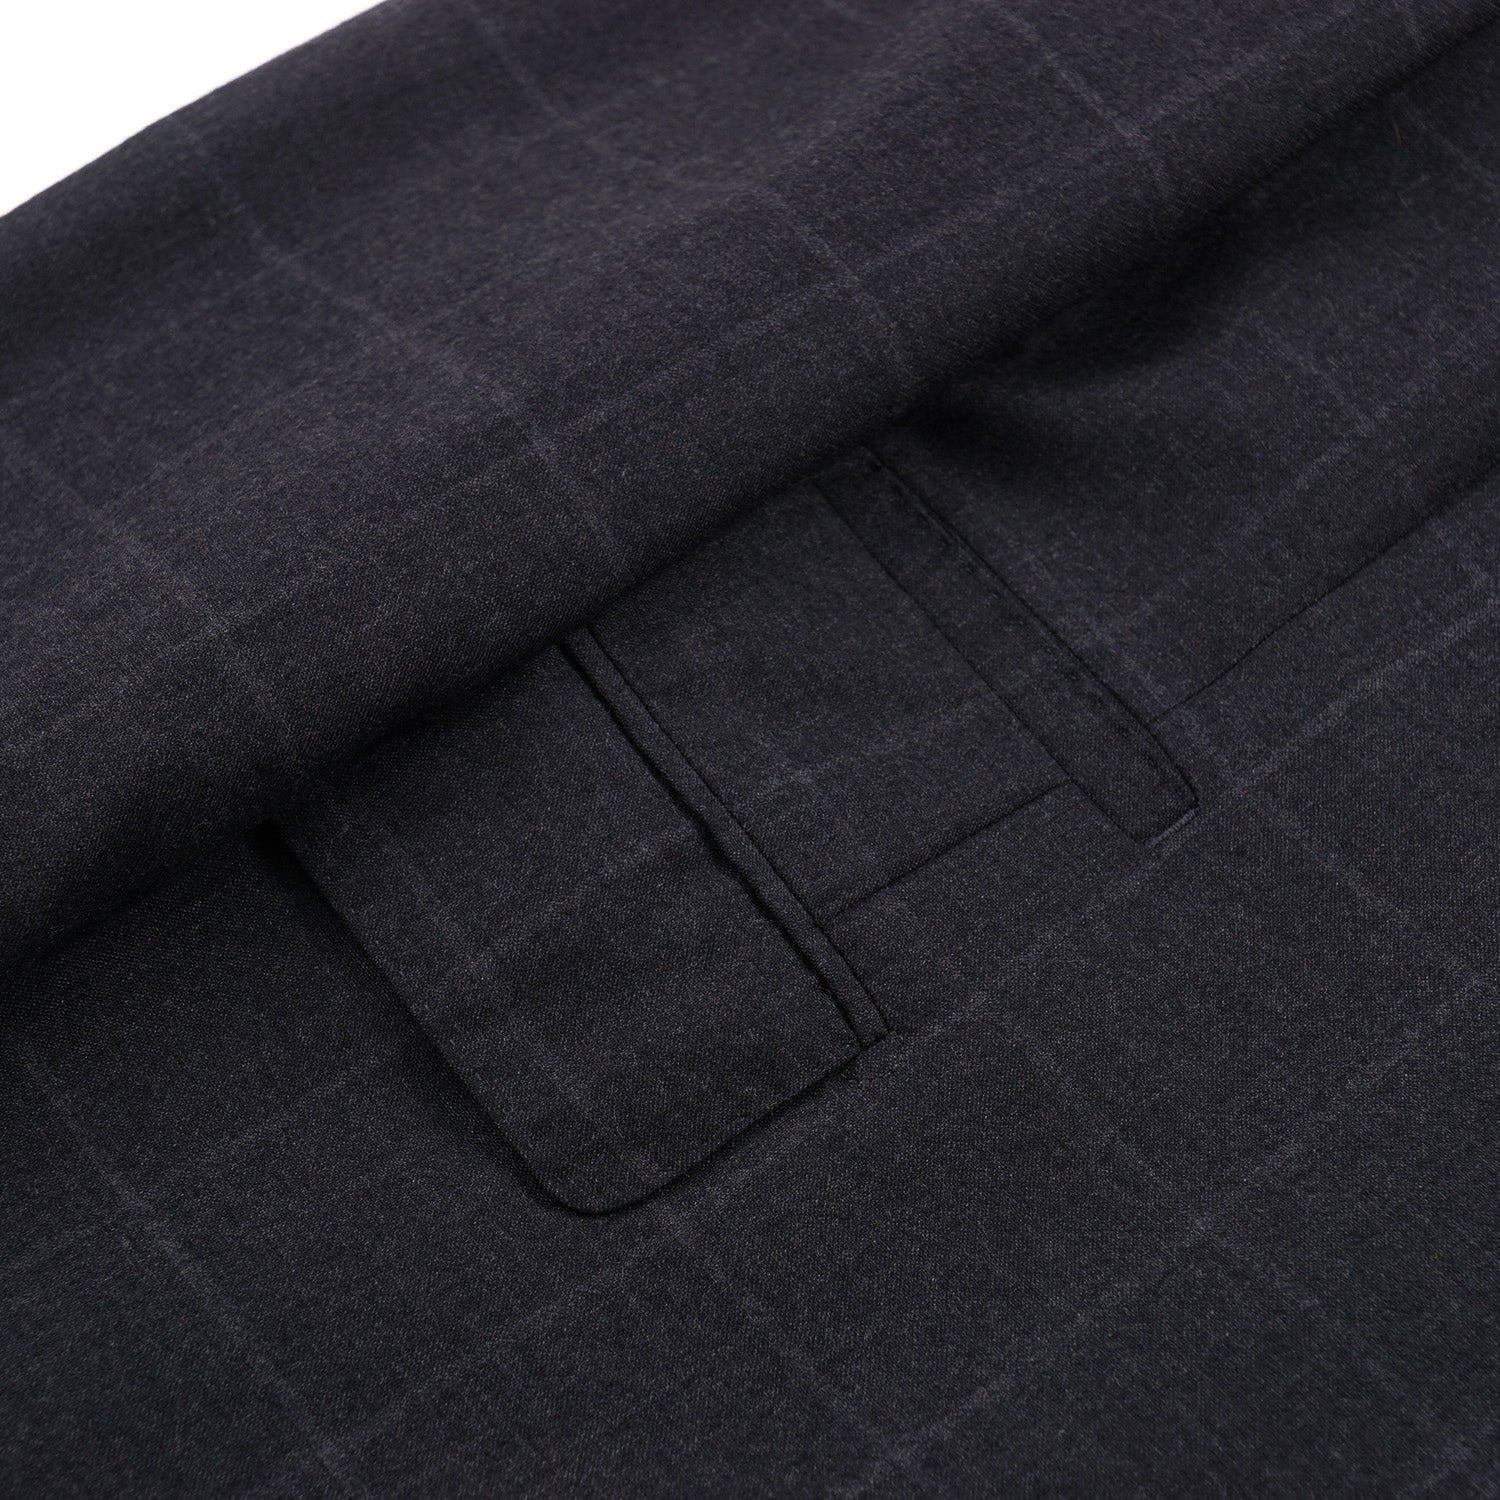 Brunello Cucinelli Wool and Silk Suit - Top Shelf Apparel